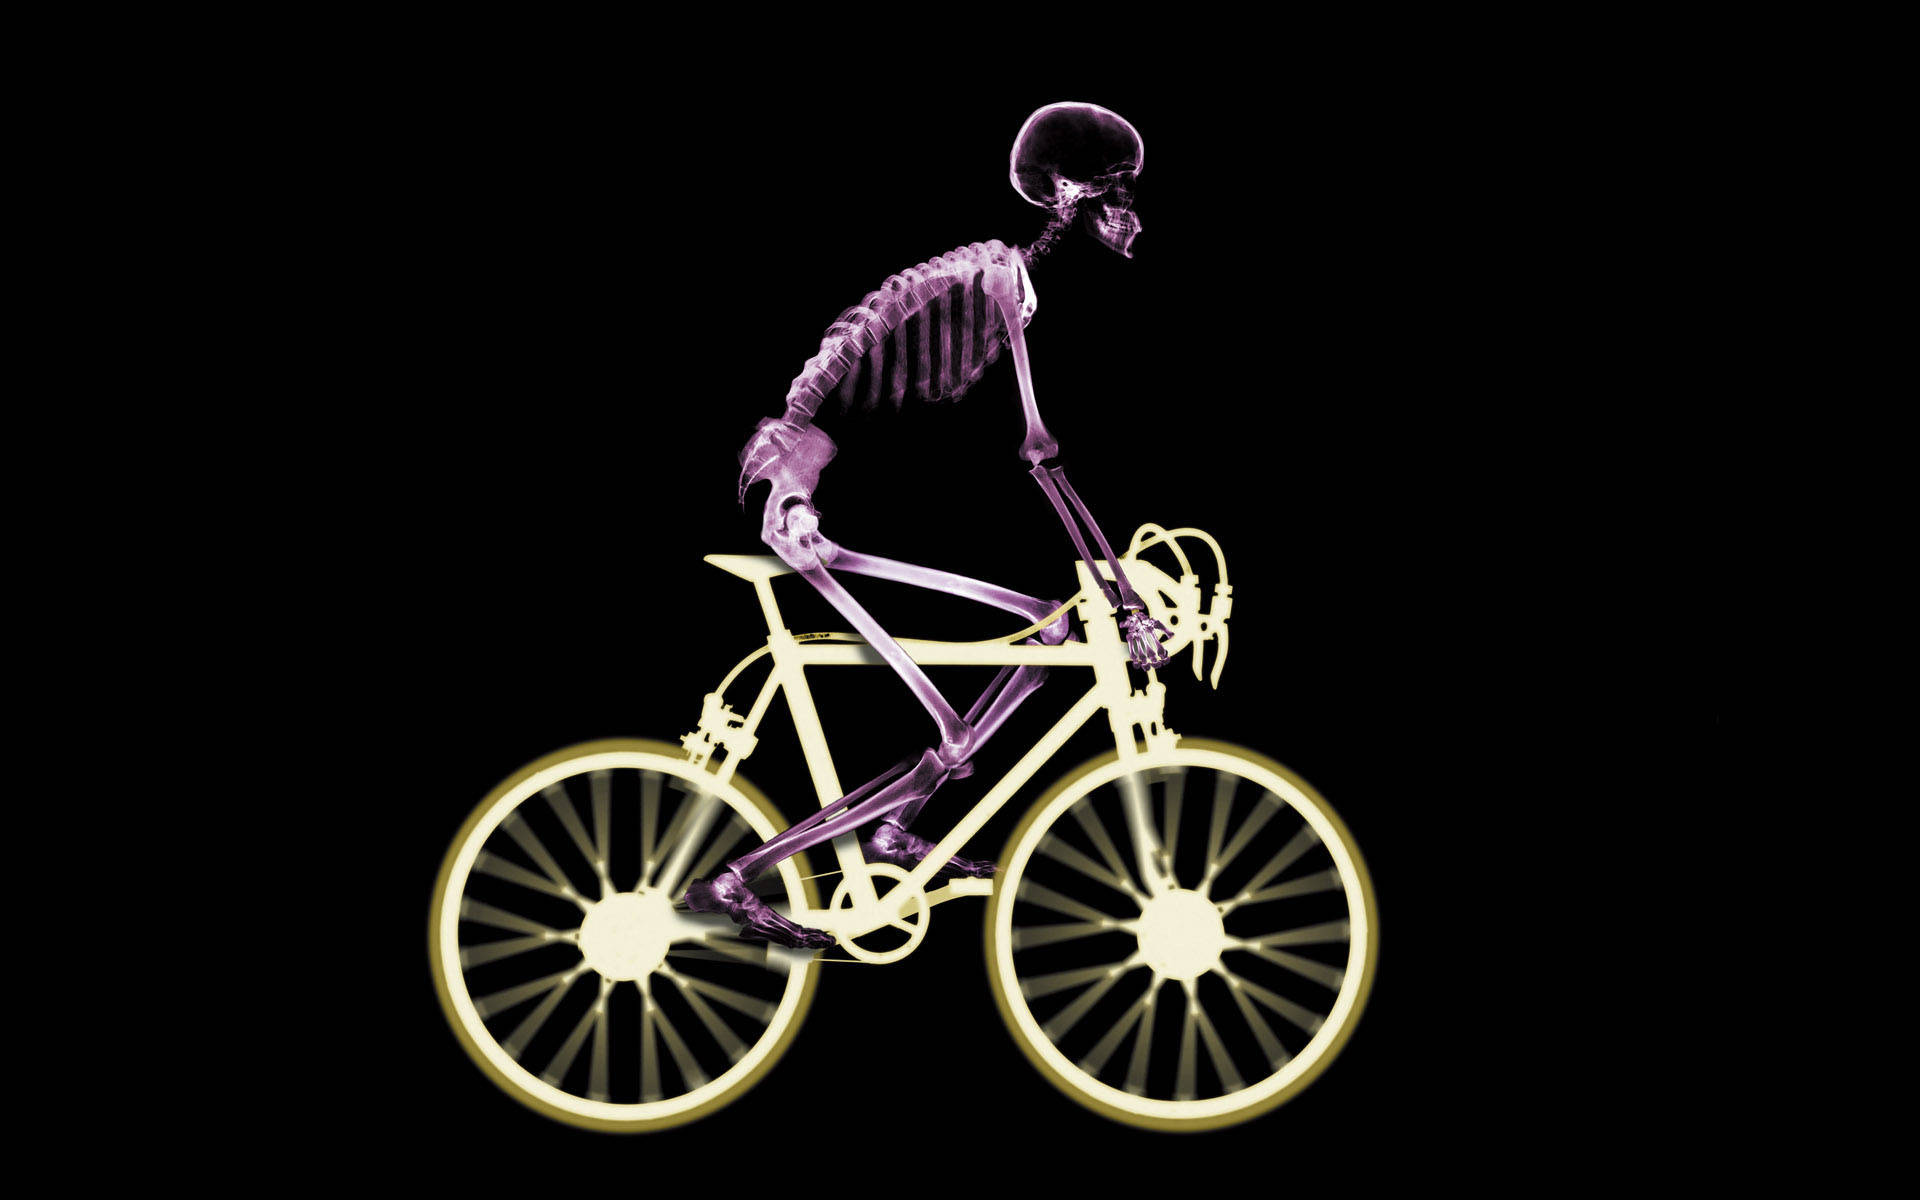 Skeleton On A Bicycle Wallpaper